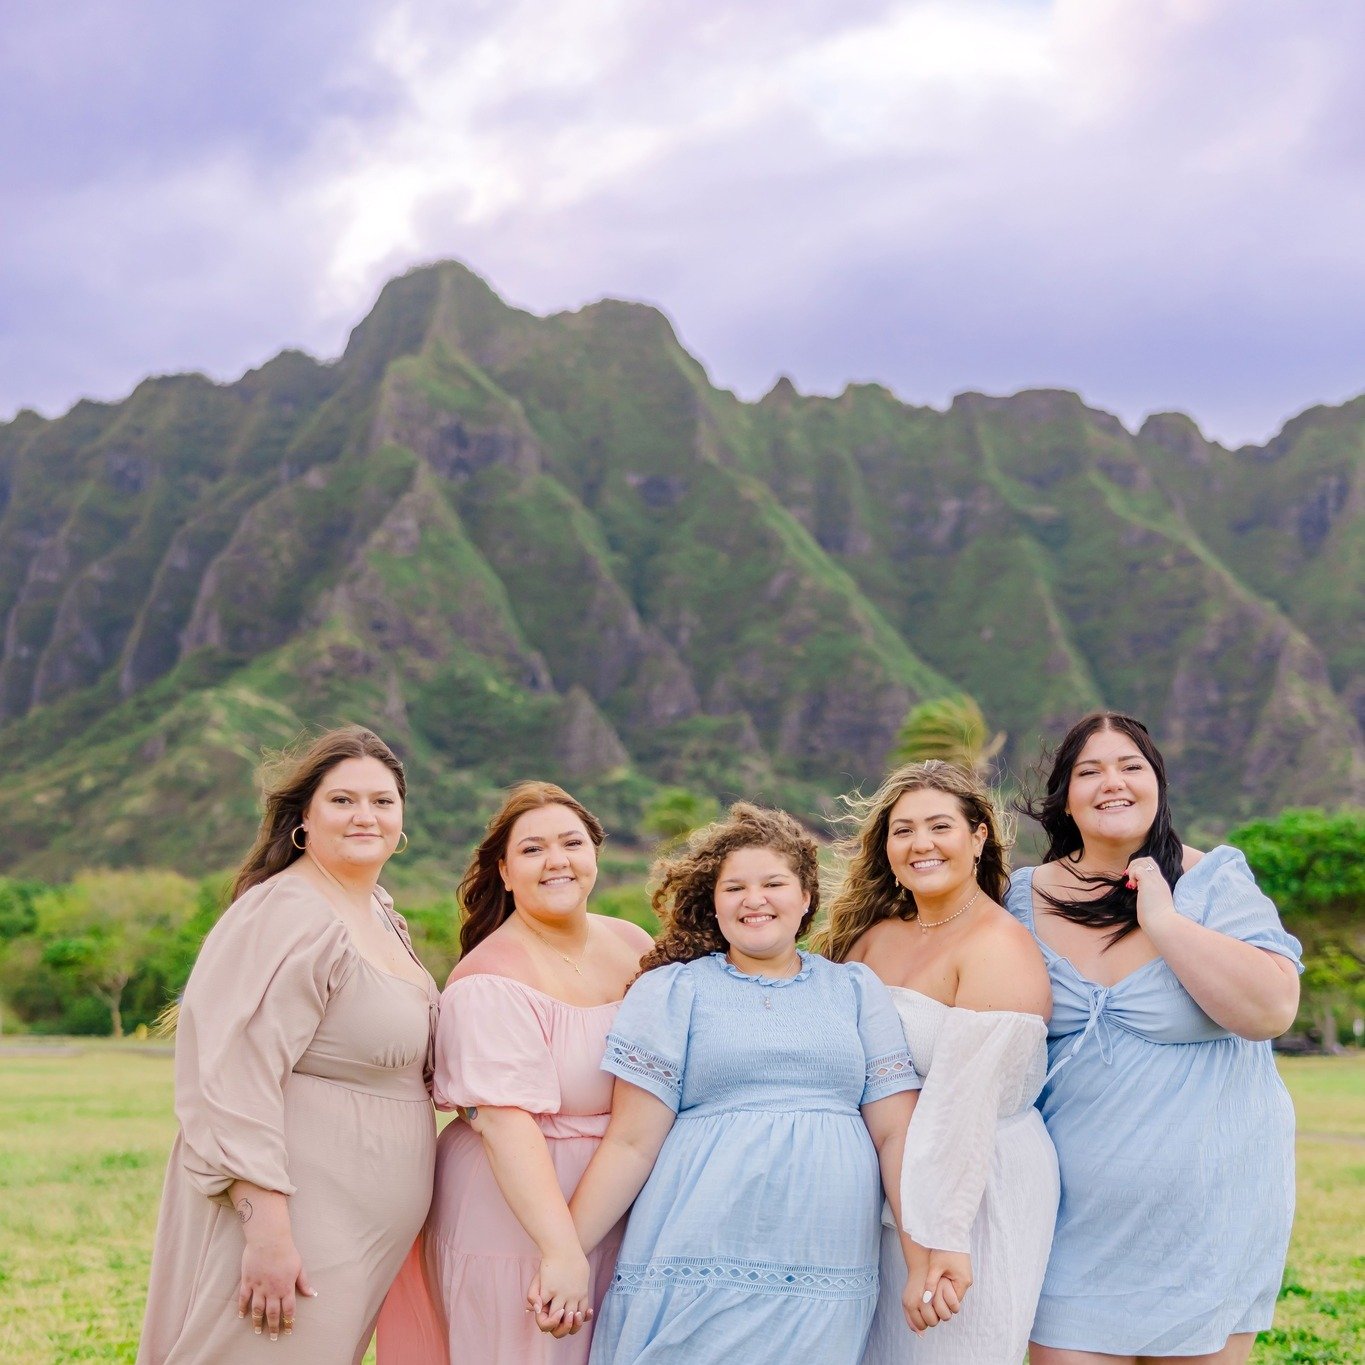 Capturing sisterhood against the breathtaking backdrop of the Kualoa Mountains! These five lovely ladies brought so much joy to their family session on Oahu. 
.
.
.
.
.
.
.
.
.
.
.
.
.
.
#hiltonwaikoloa #maunakeabeachhotel #maunalani #westinhapunabea